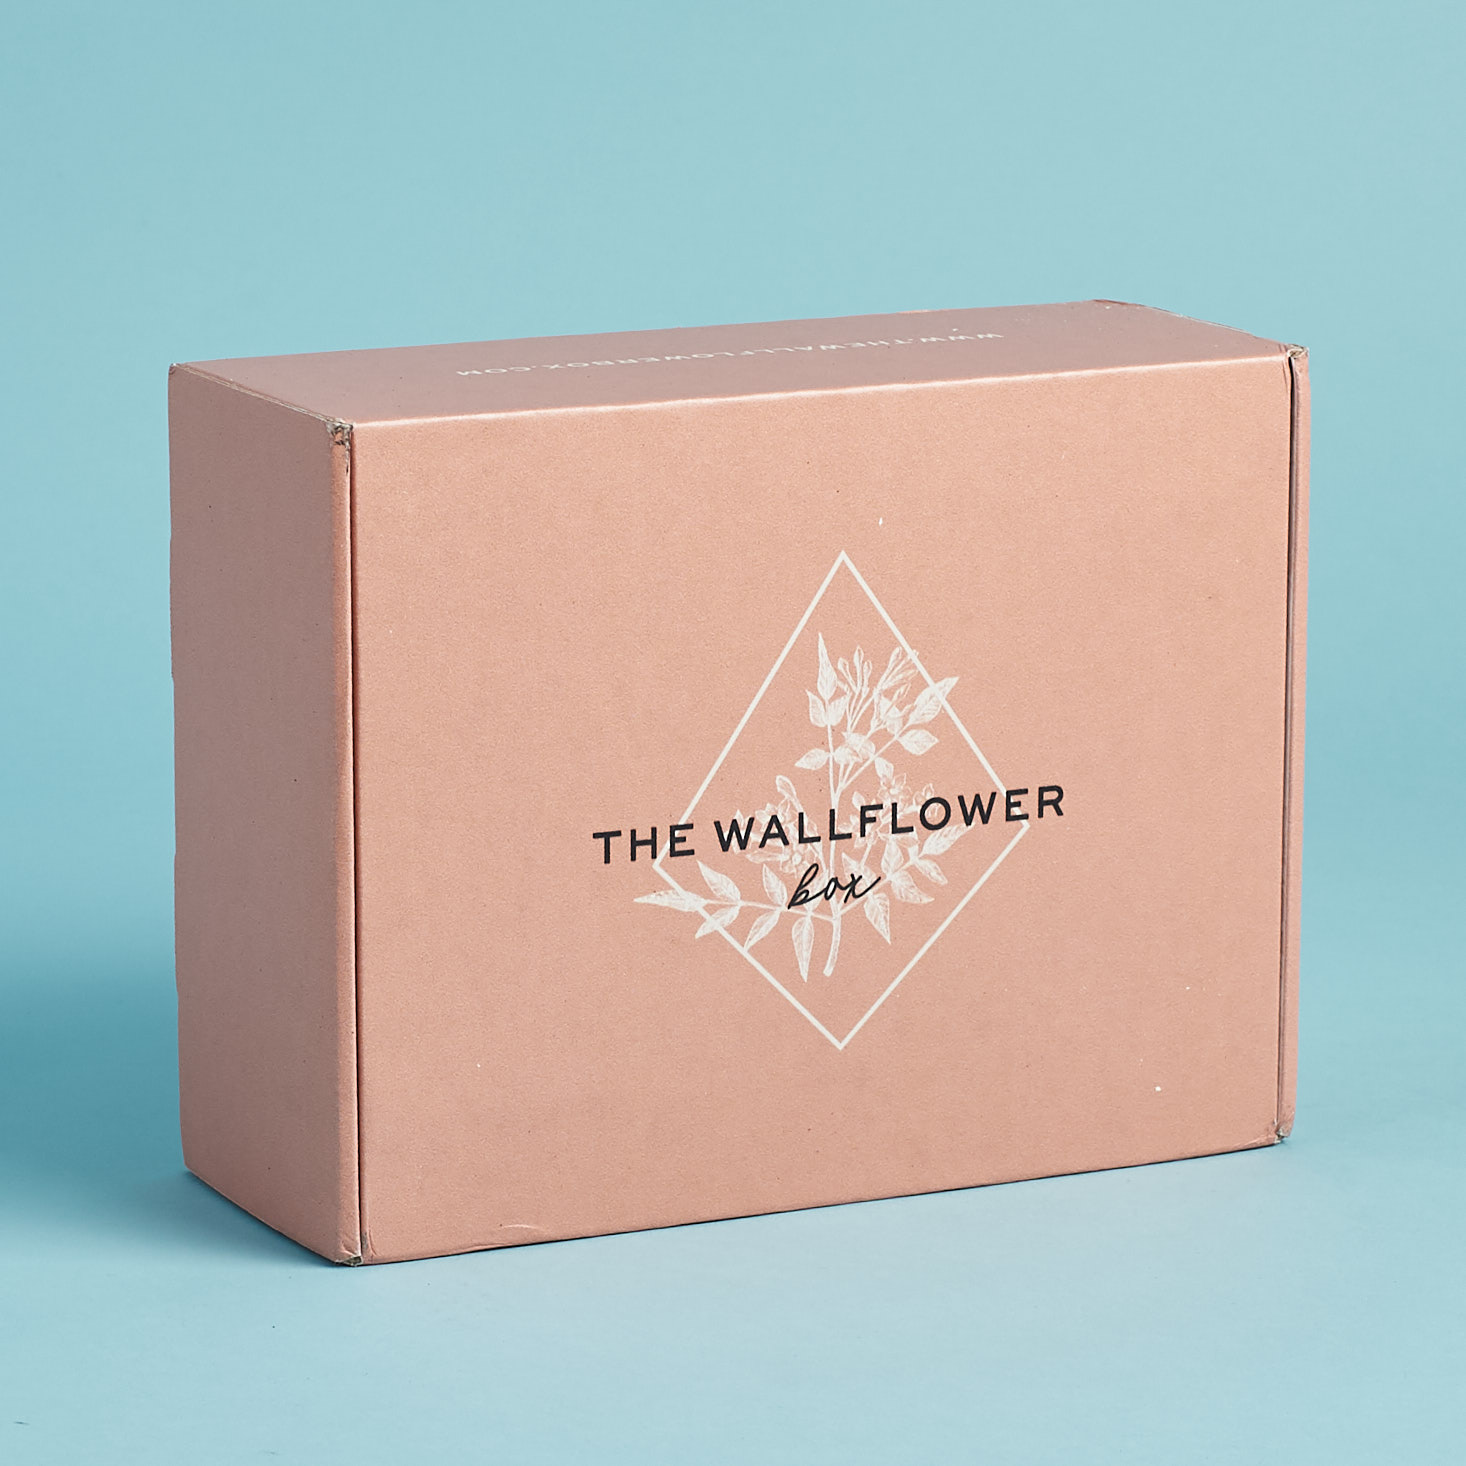 The Wallflower Box Review + Coupon – November 2017